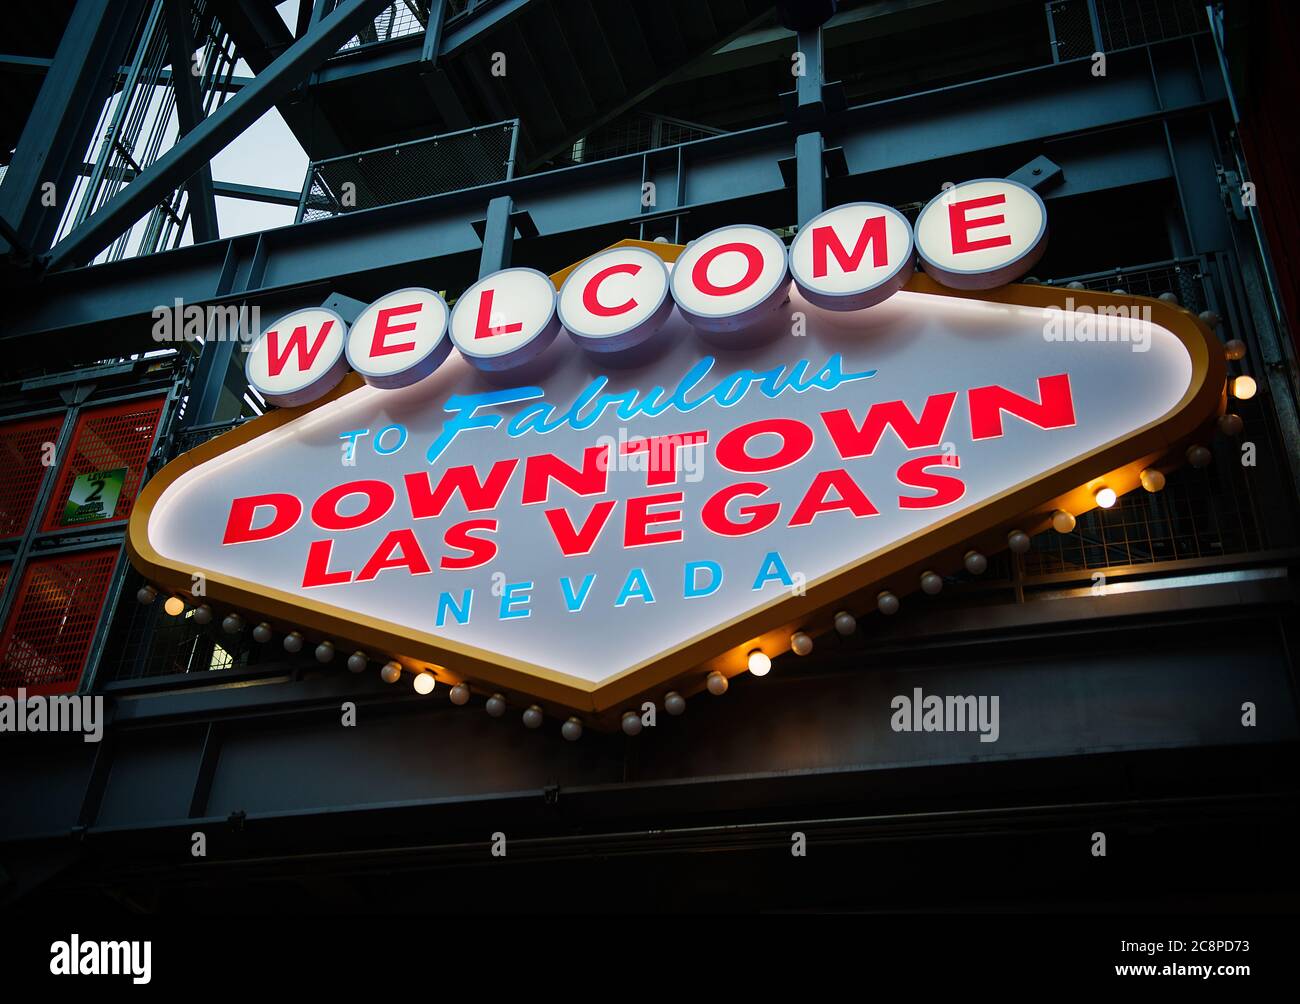 welcome to las vegas sign, Las Vegas, Nevada Stock Photo